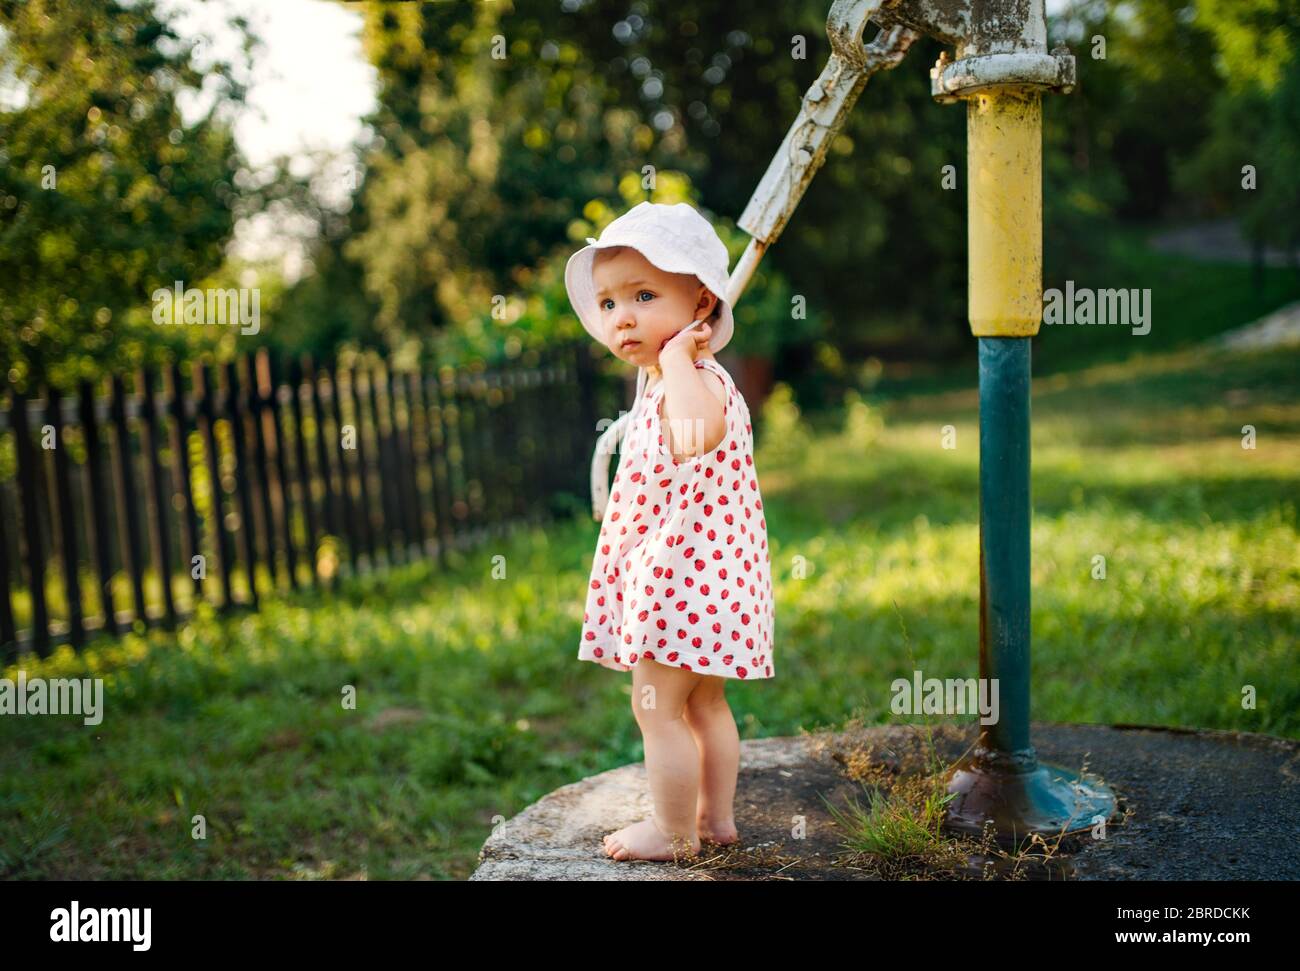 https://c8.alamy.com/comp/2BRDCKK/a-toddler-girl-standing-outdoors-in-garden-in-summer-2BRDCKK.jpg